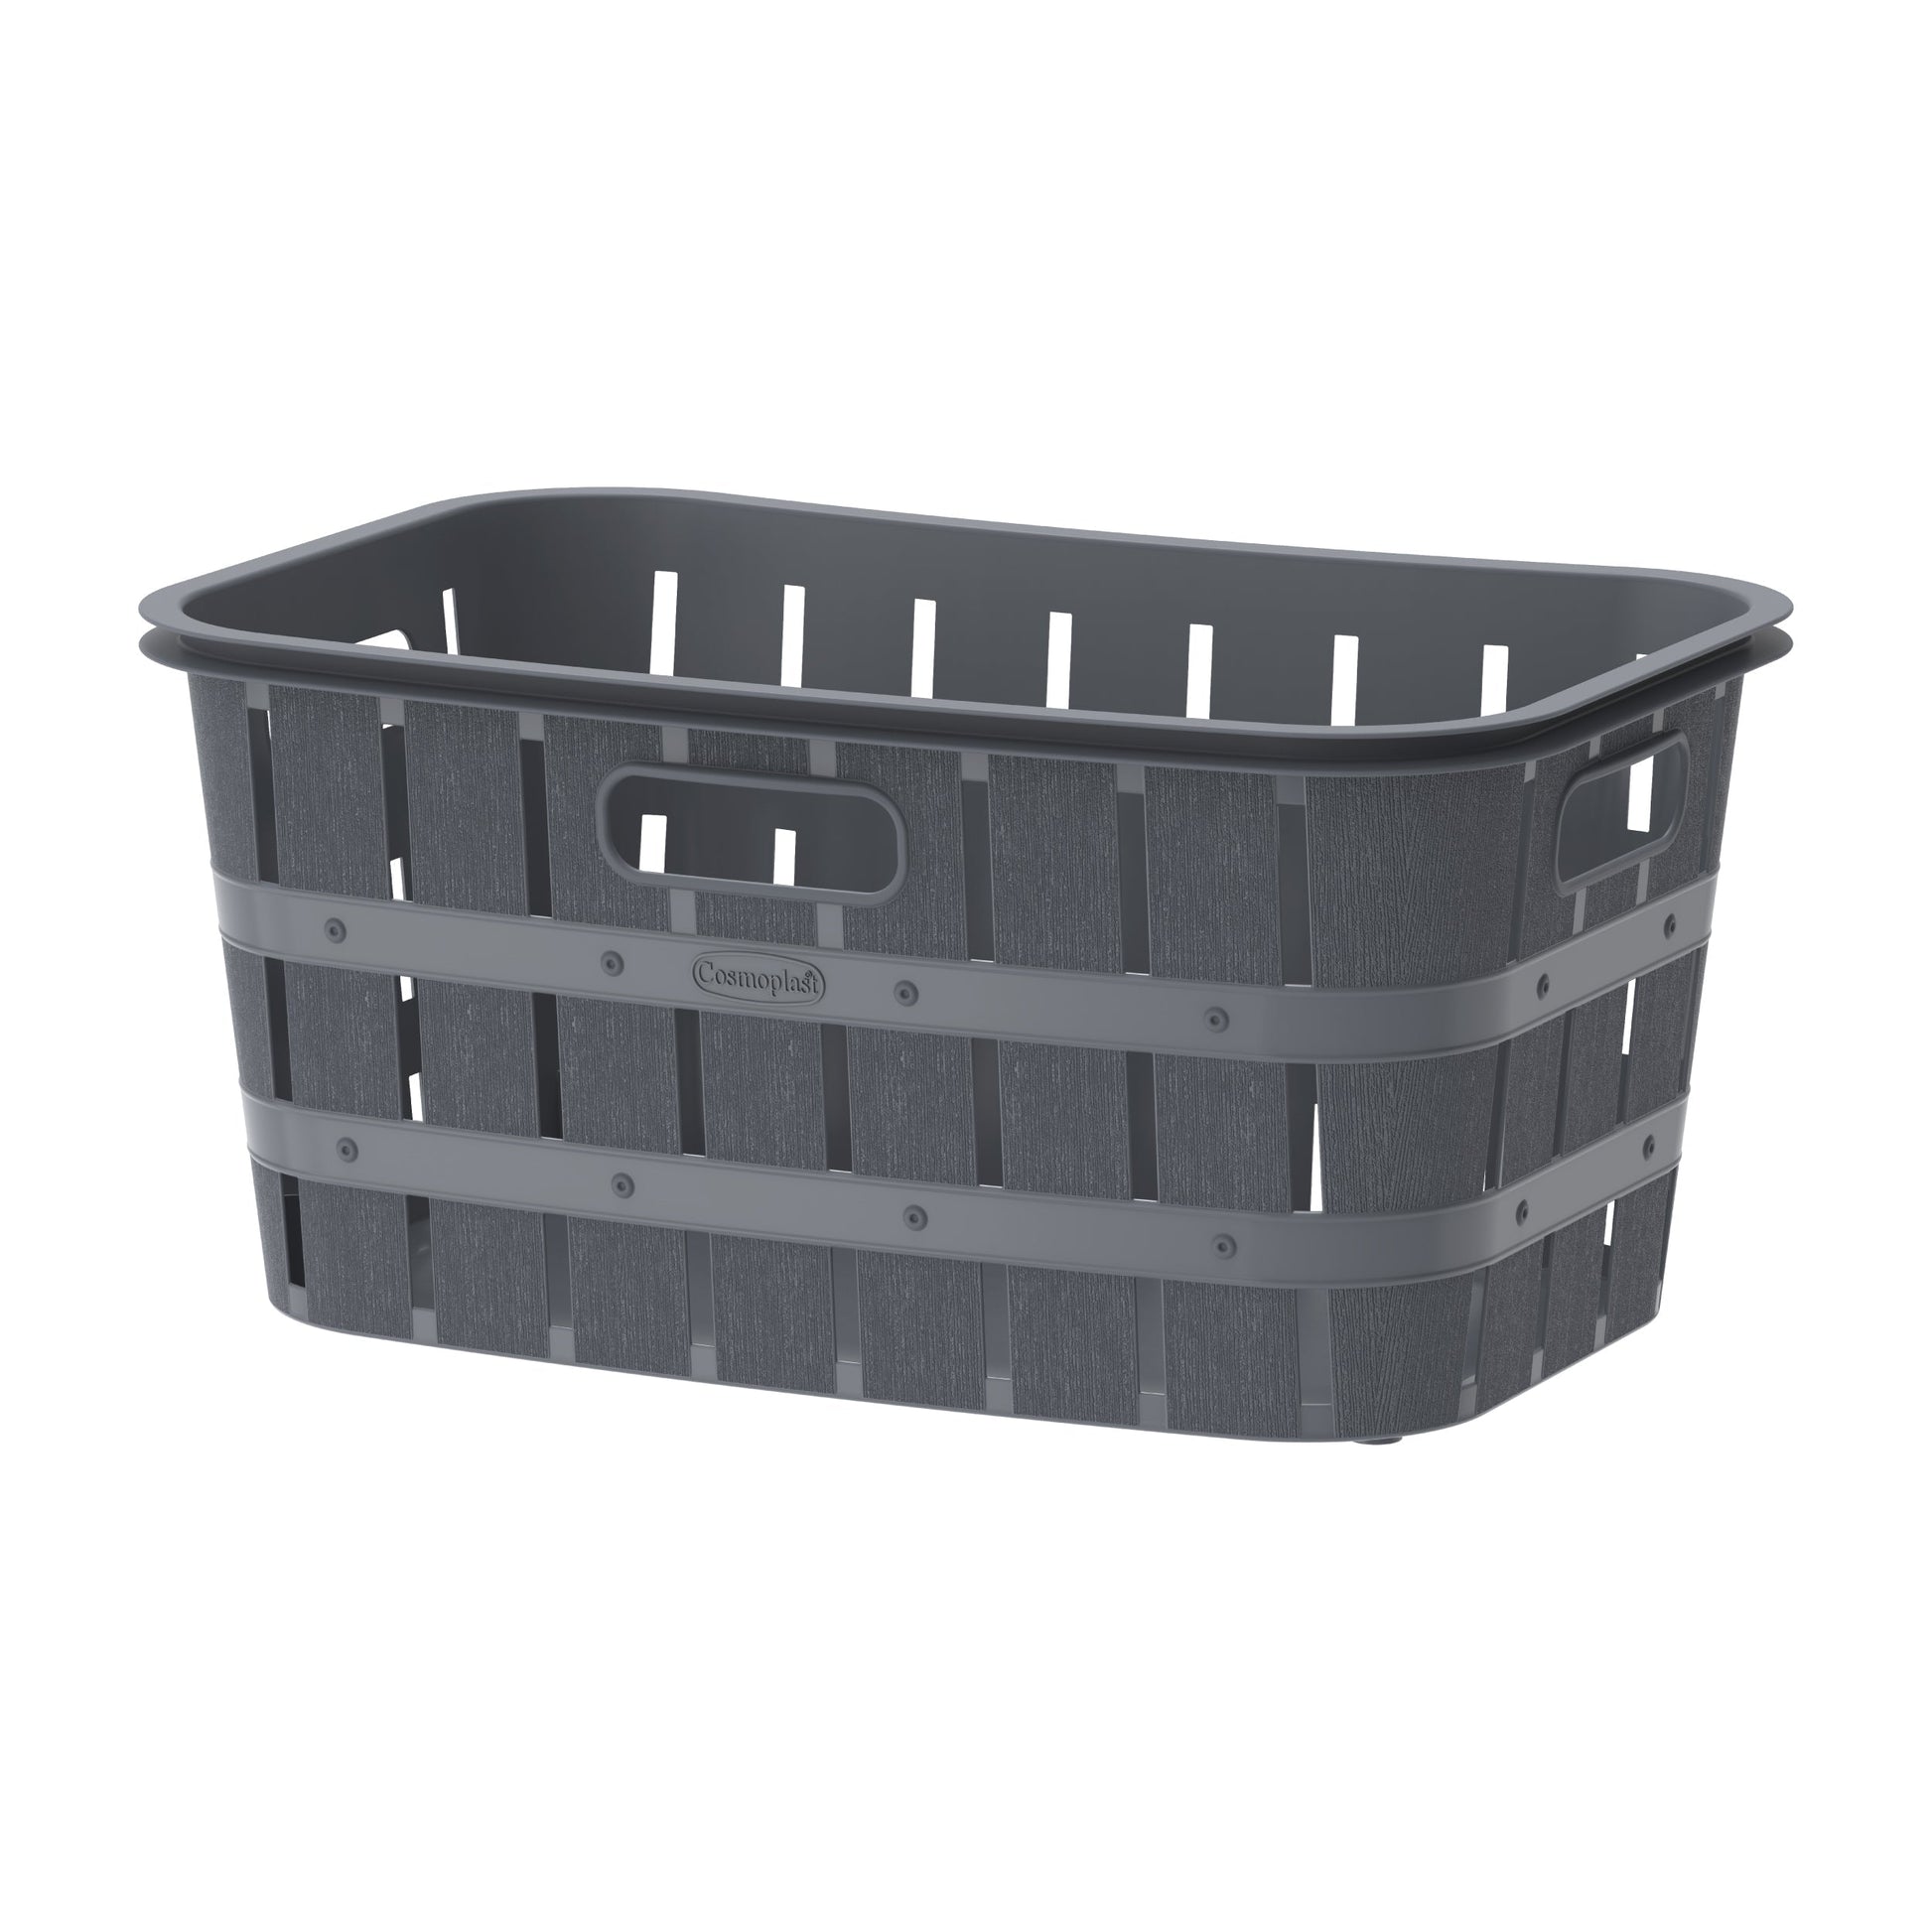 40L Cedargrain Laundry Basket - Cosmoplast Qatar